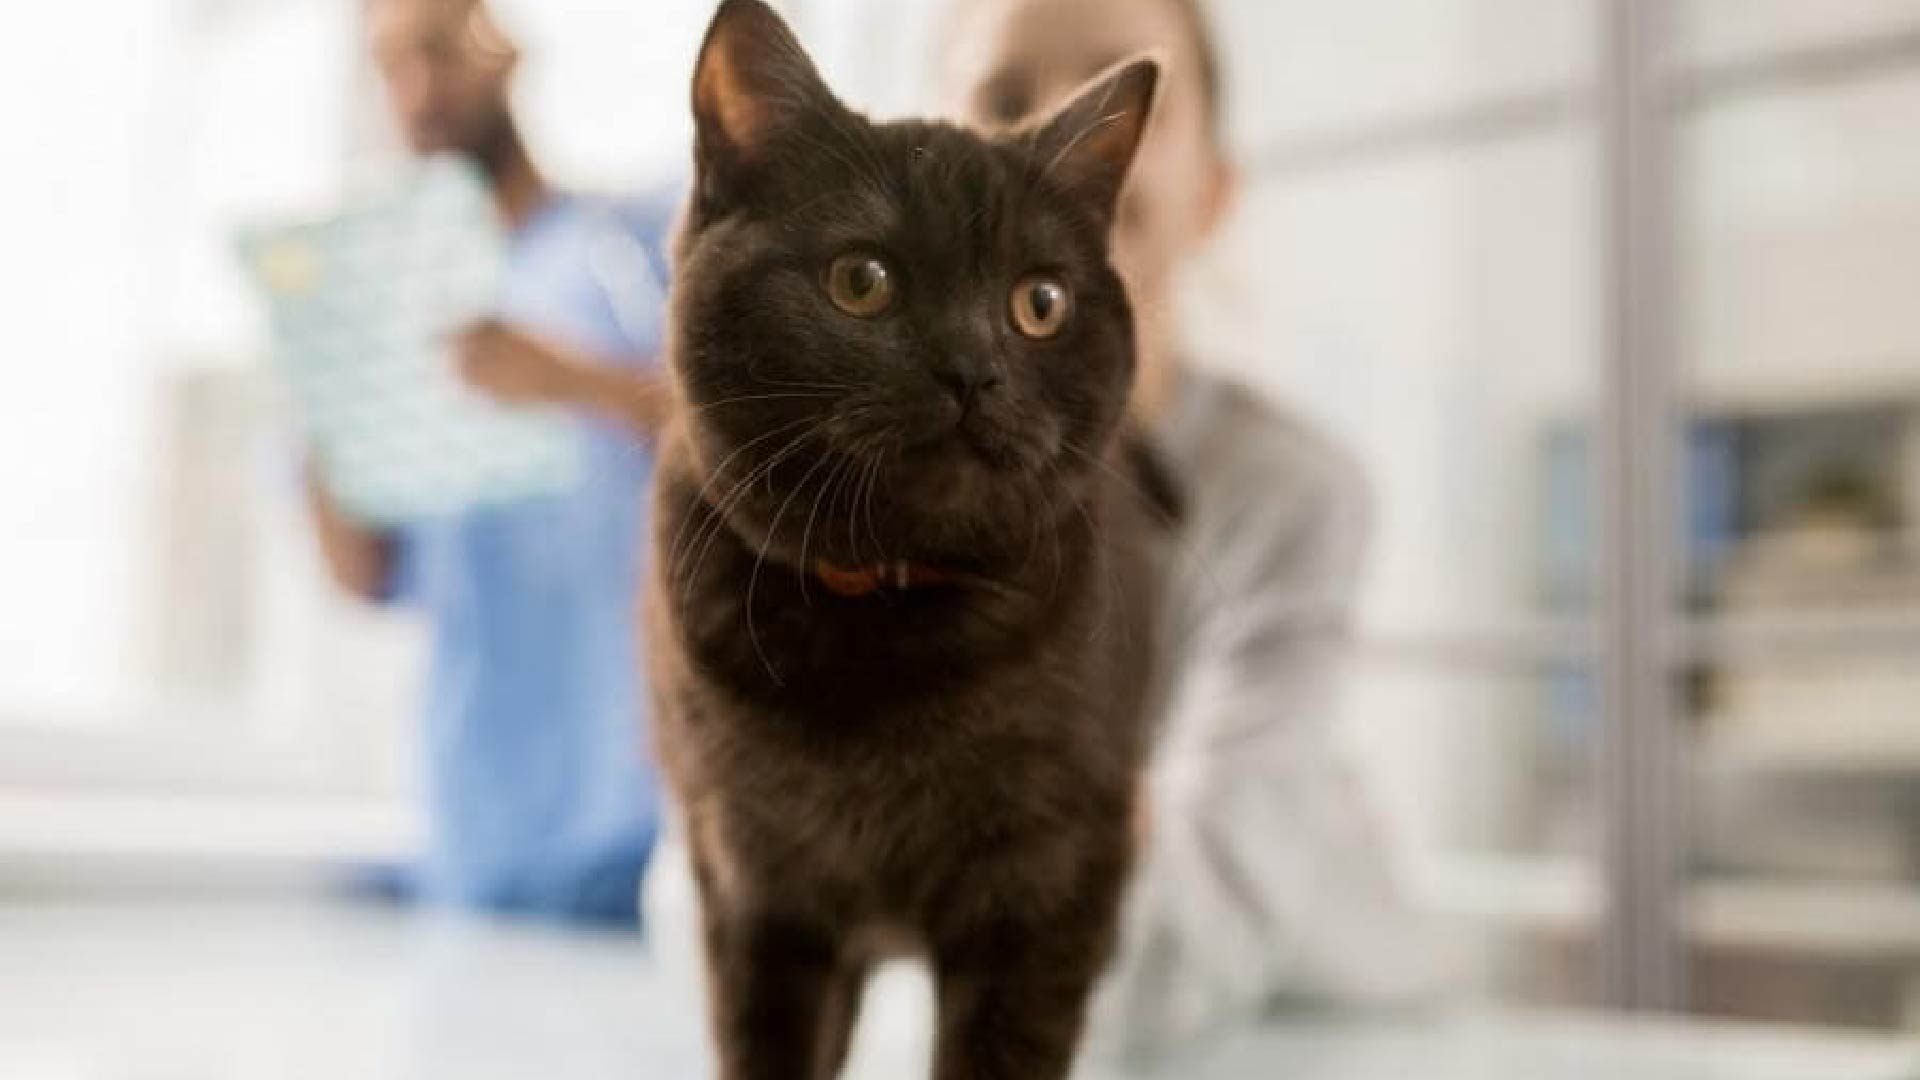 A black cat in hospital